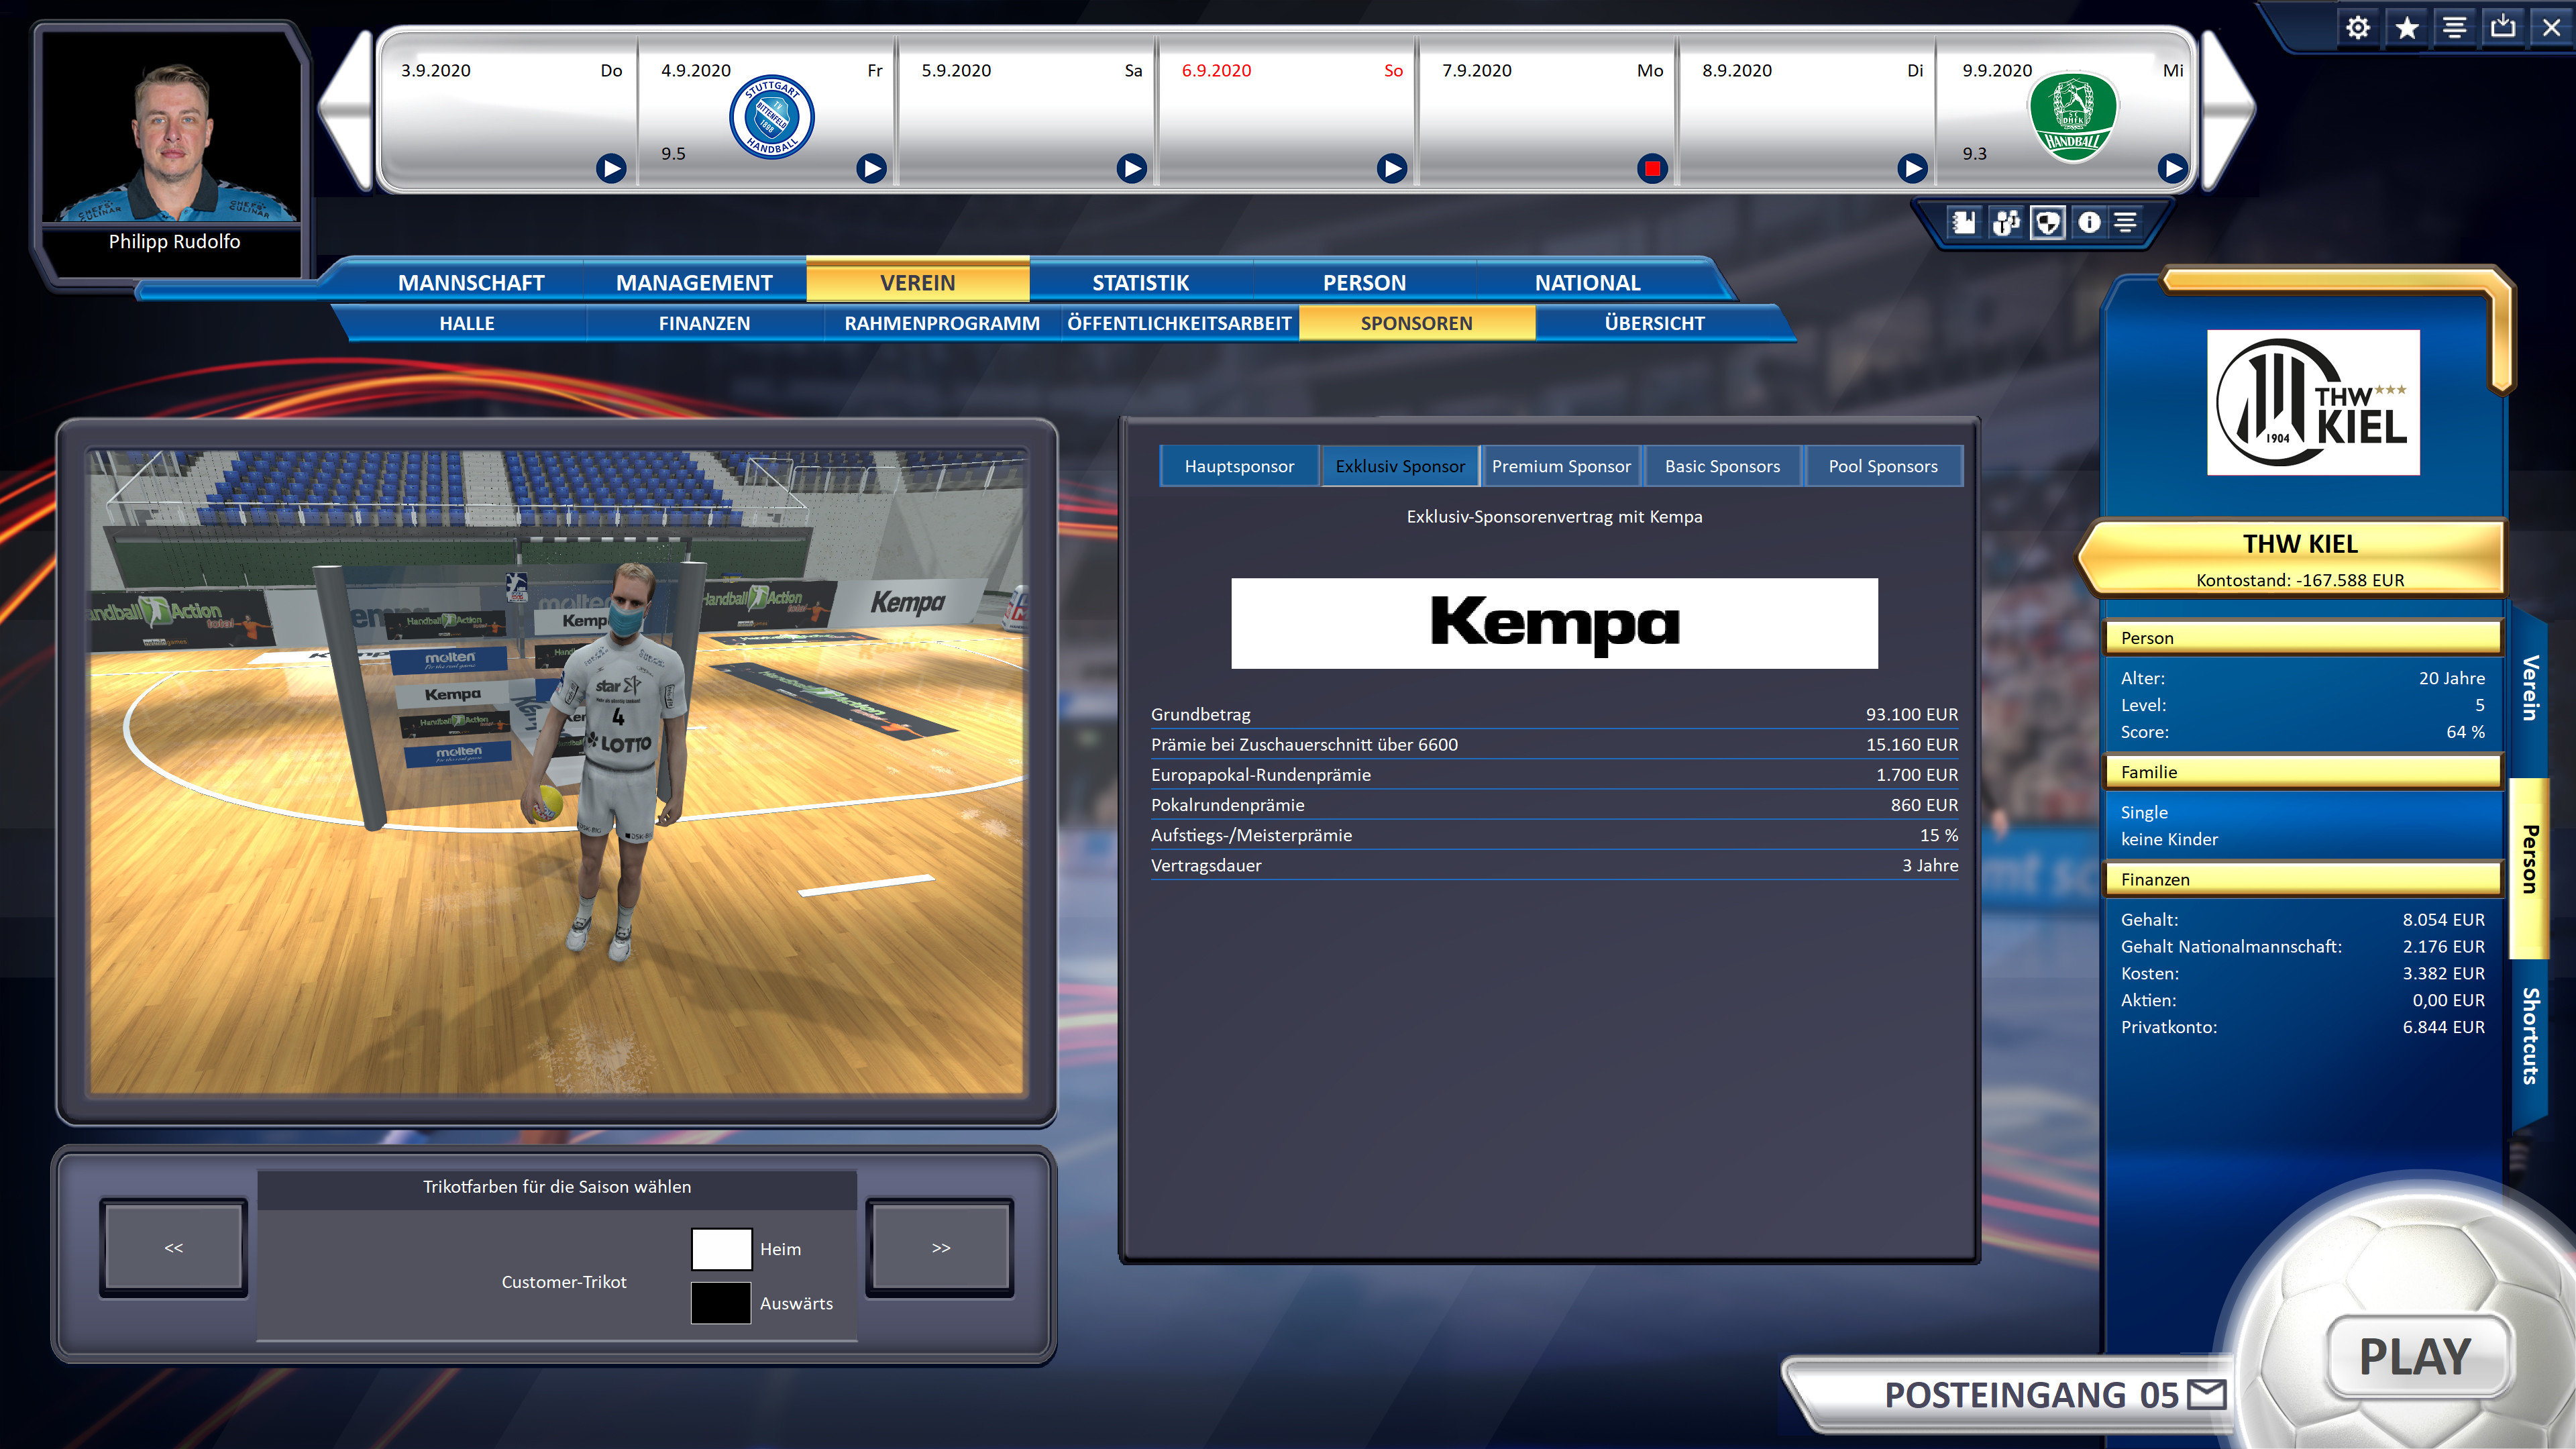 Handball Manager 2021 screenshot